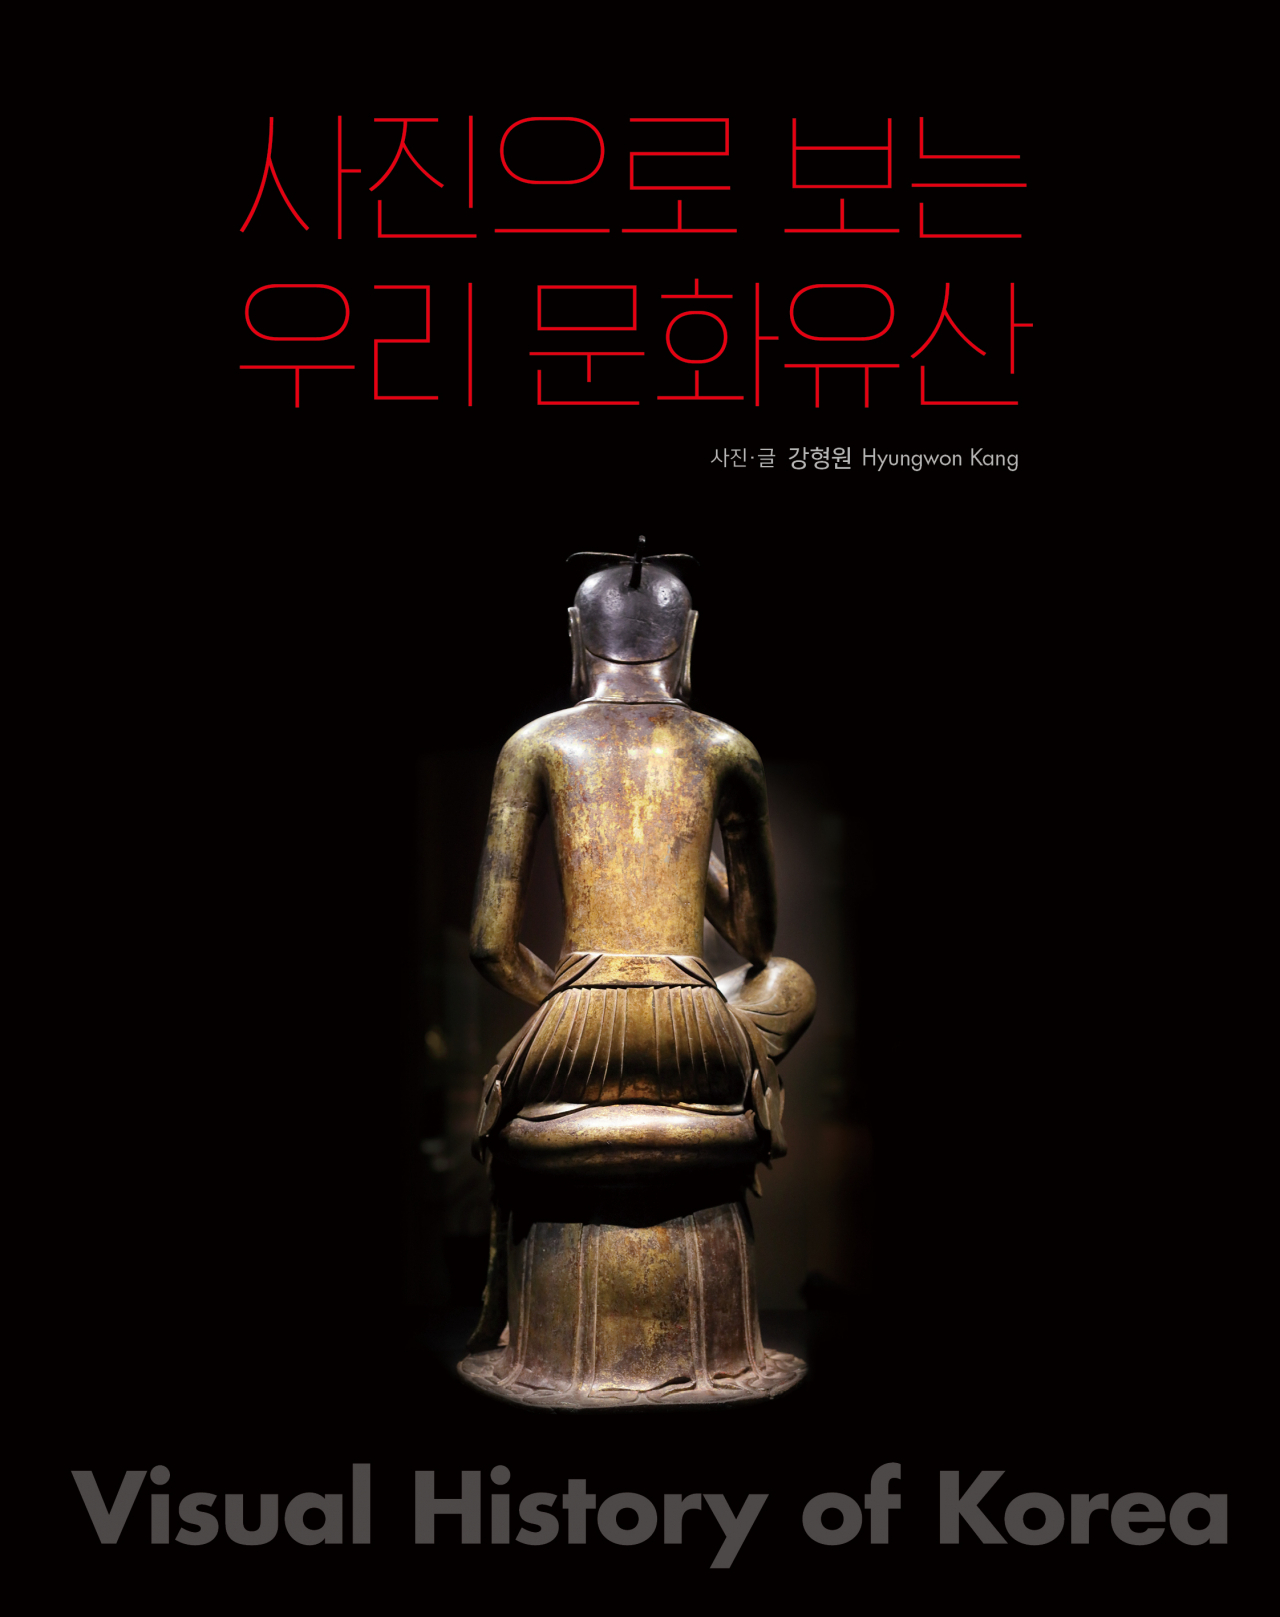 “Visual History of Korea” (RHK)